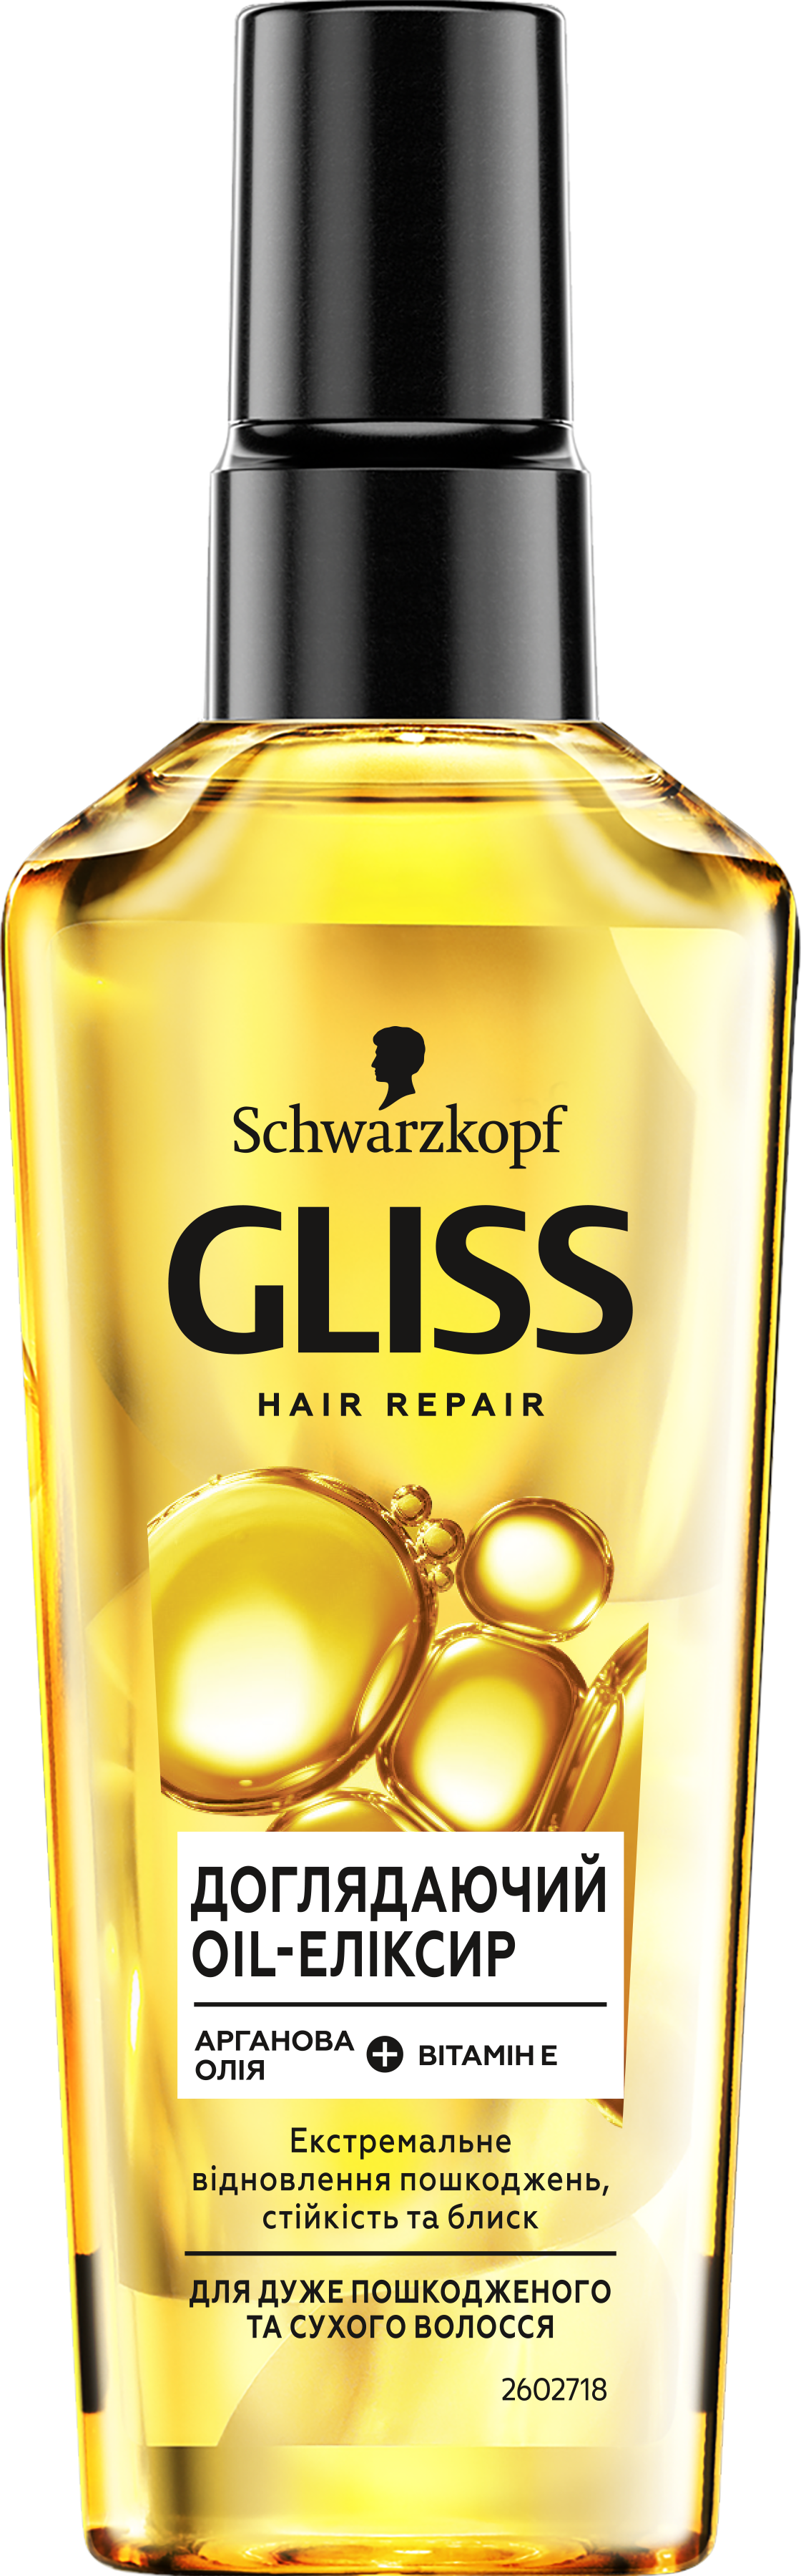 Подарочный набор Gliss Ultimate Repair: Шампунь, 400 мл + Бальзам, 200 мл + Масло для волос, 75 мл - фото 8